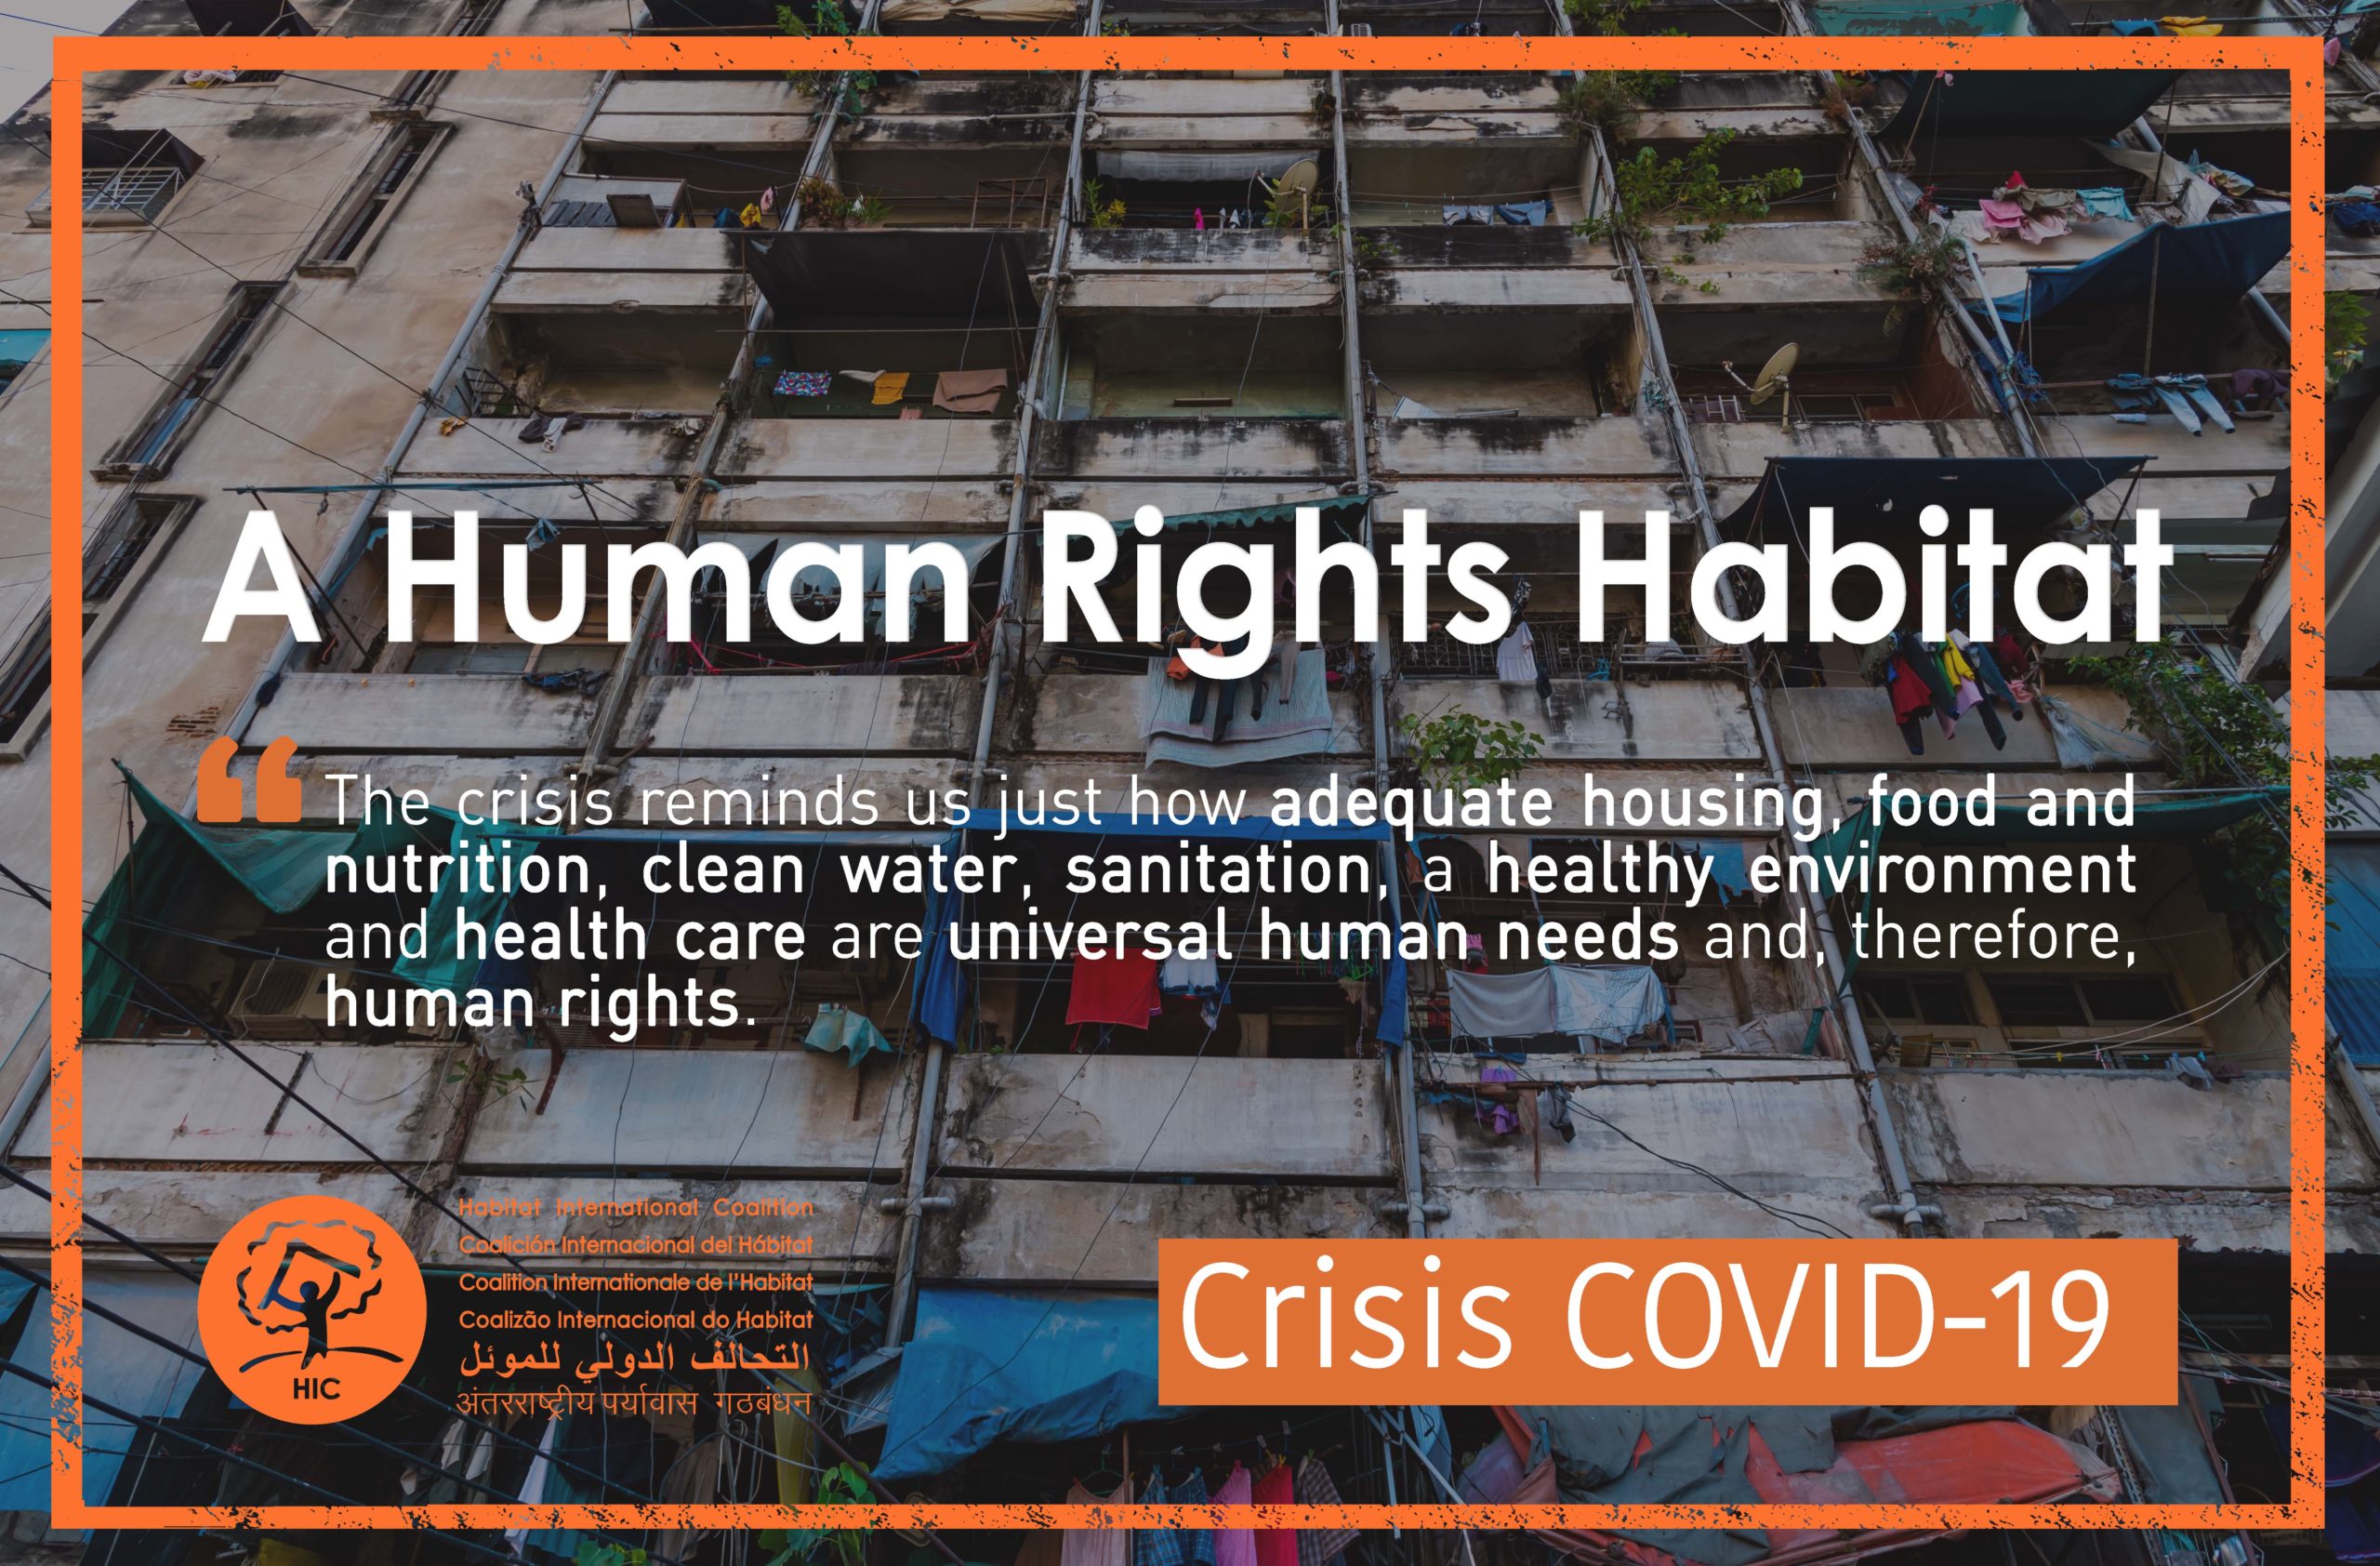 COVID-19: We Need a Human Rights Habitat